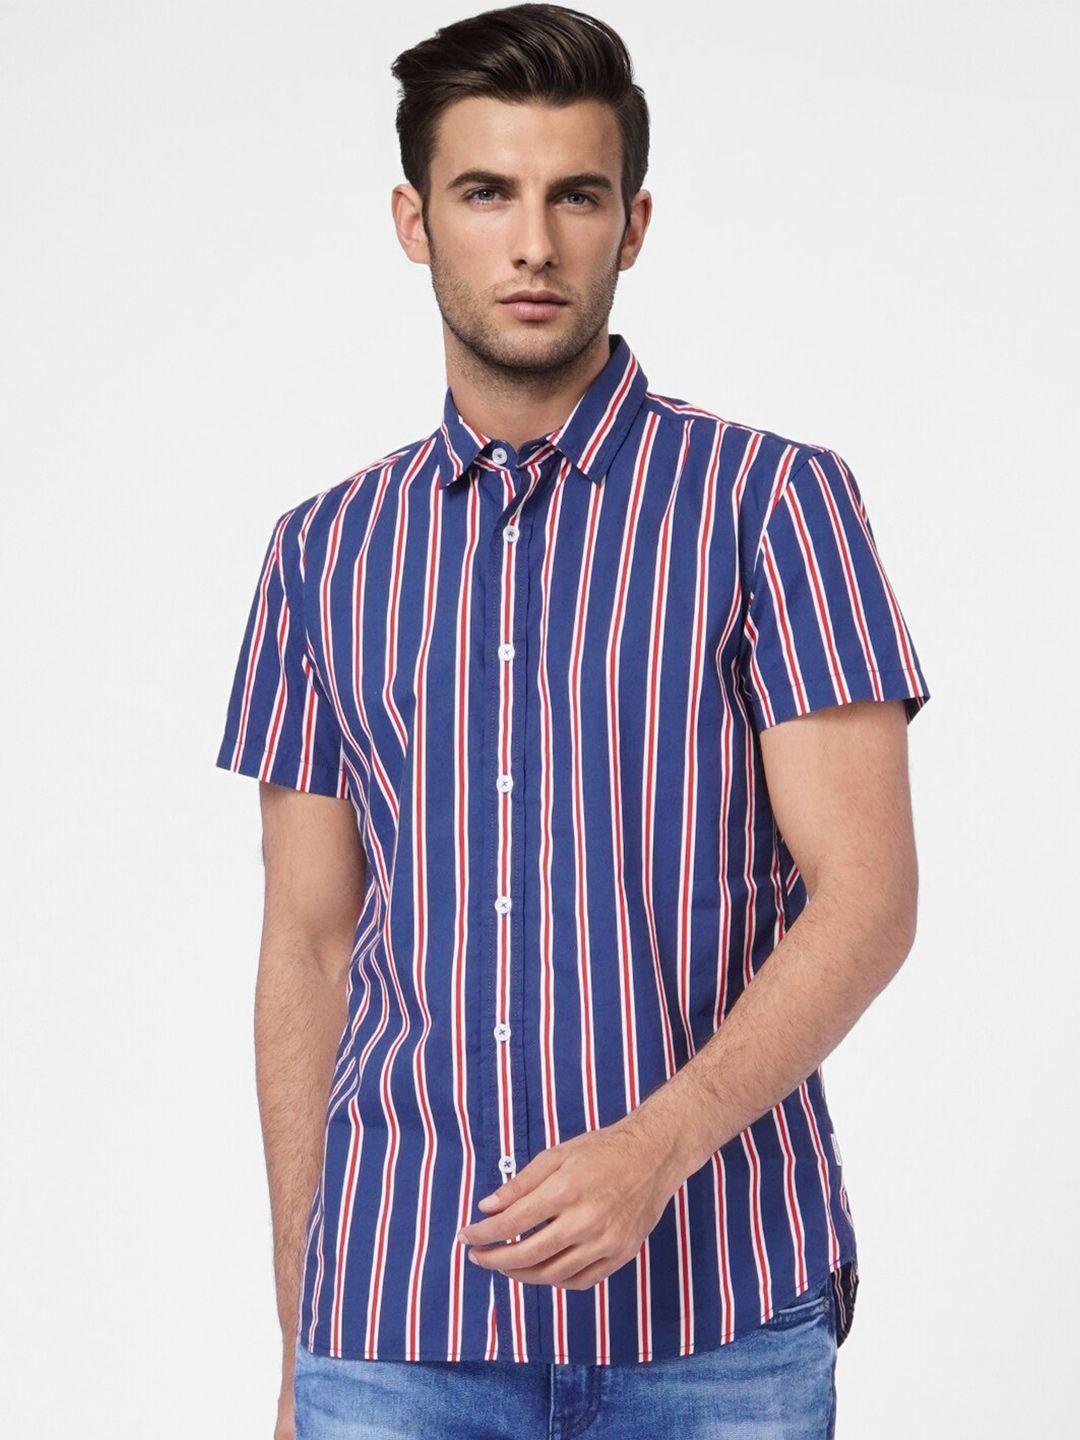 jack & jones men blue & red striped cotton casual shirt